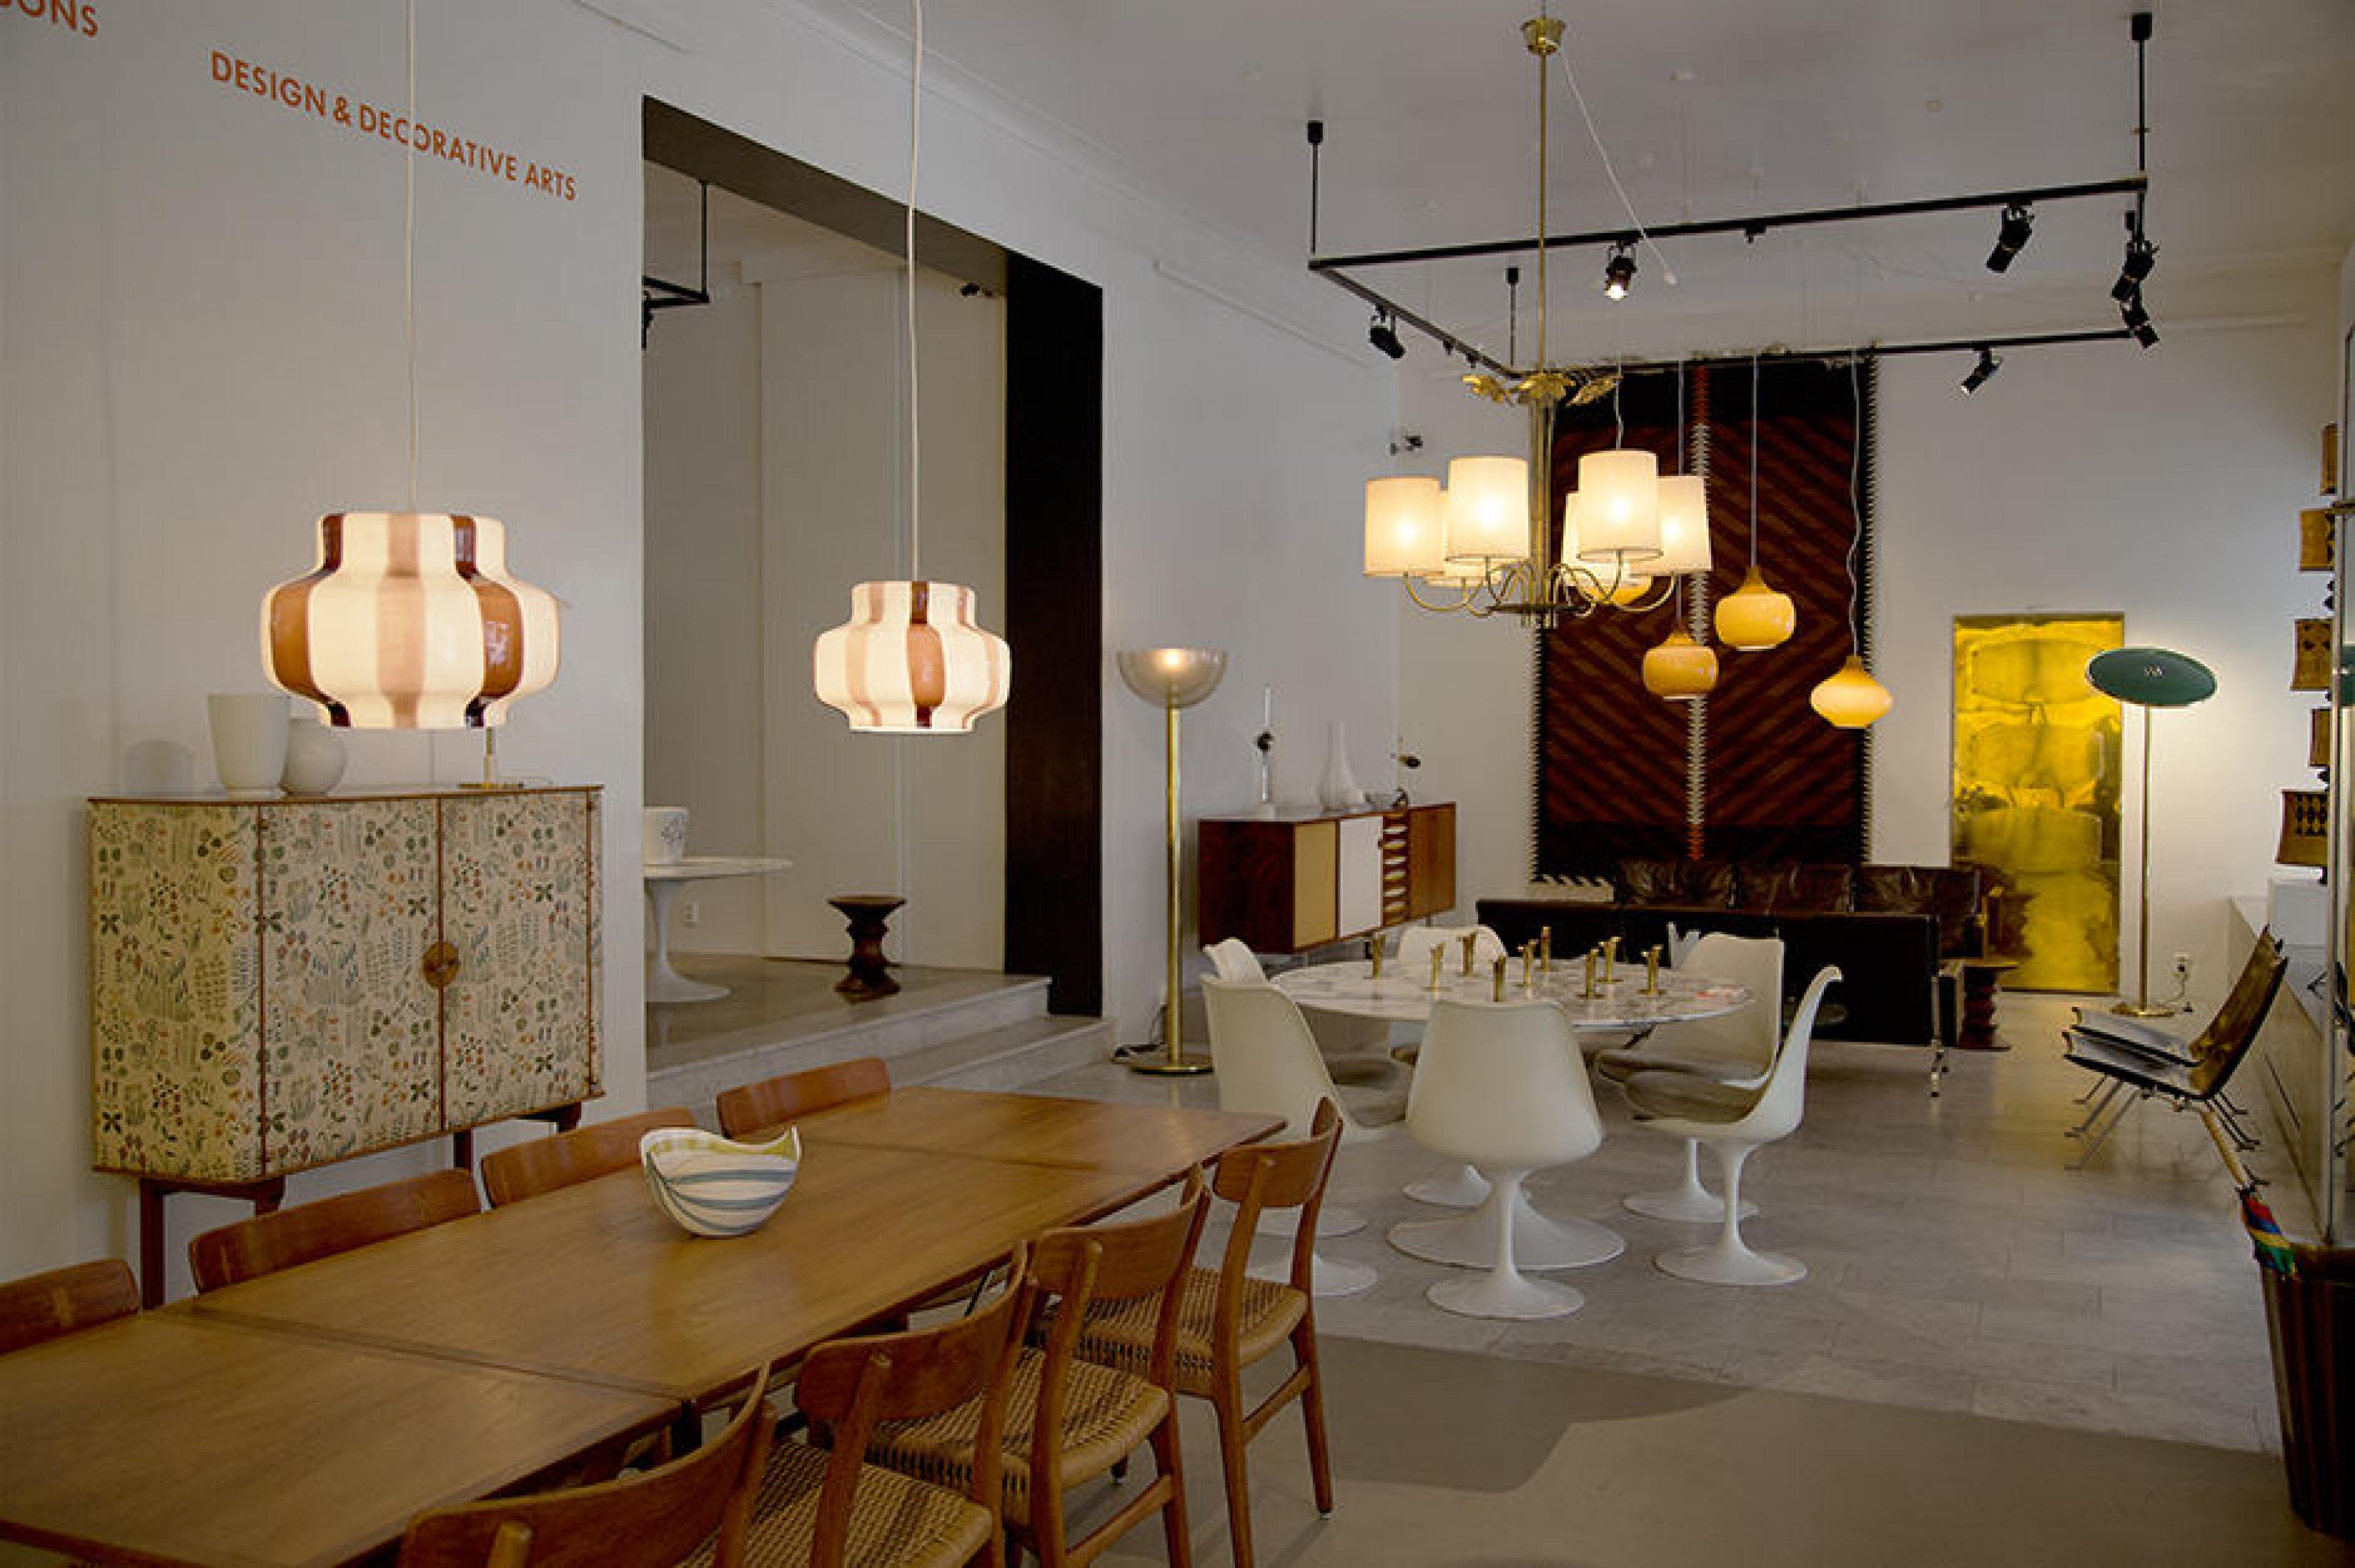 Interior View - Jackson Design AB, Stockholm, Sweden